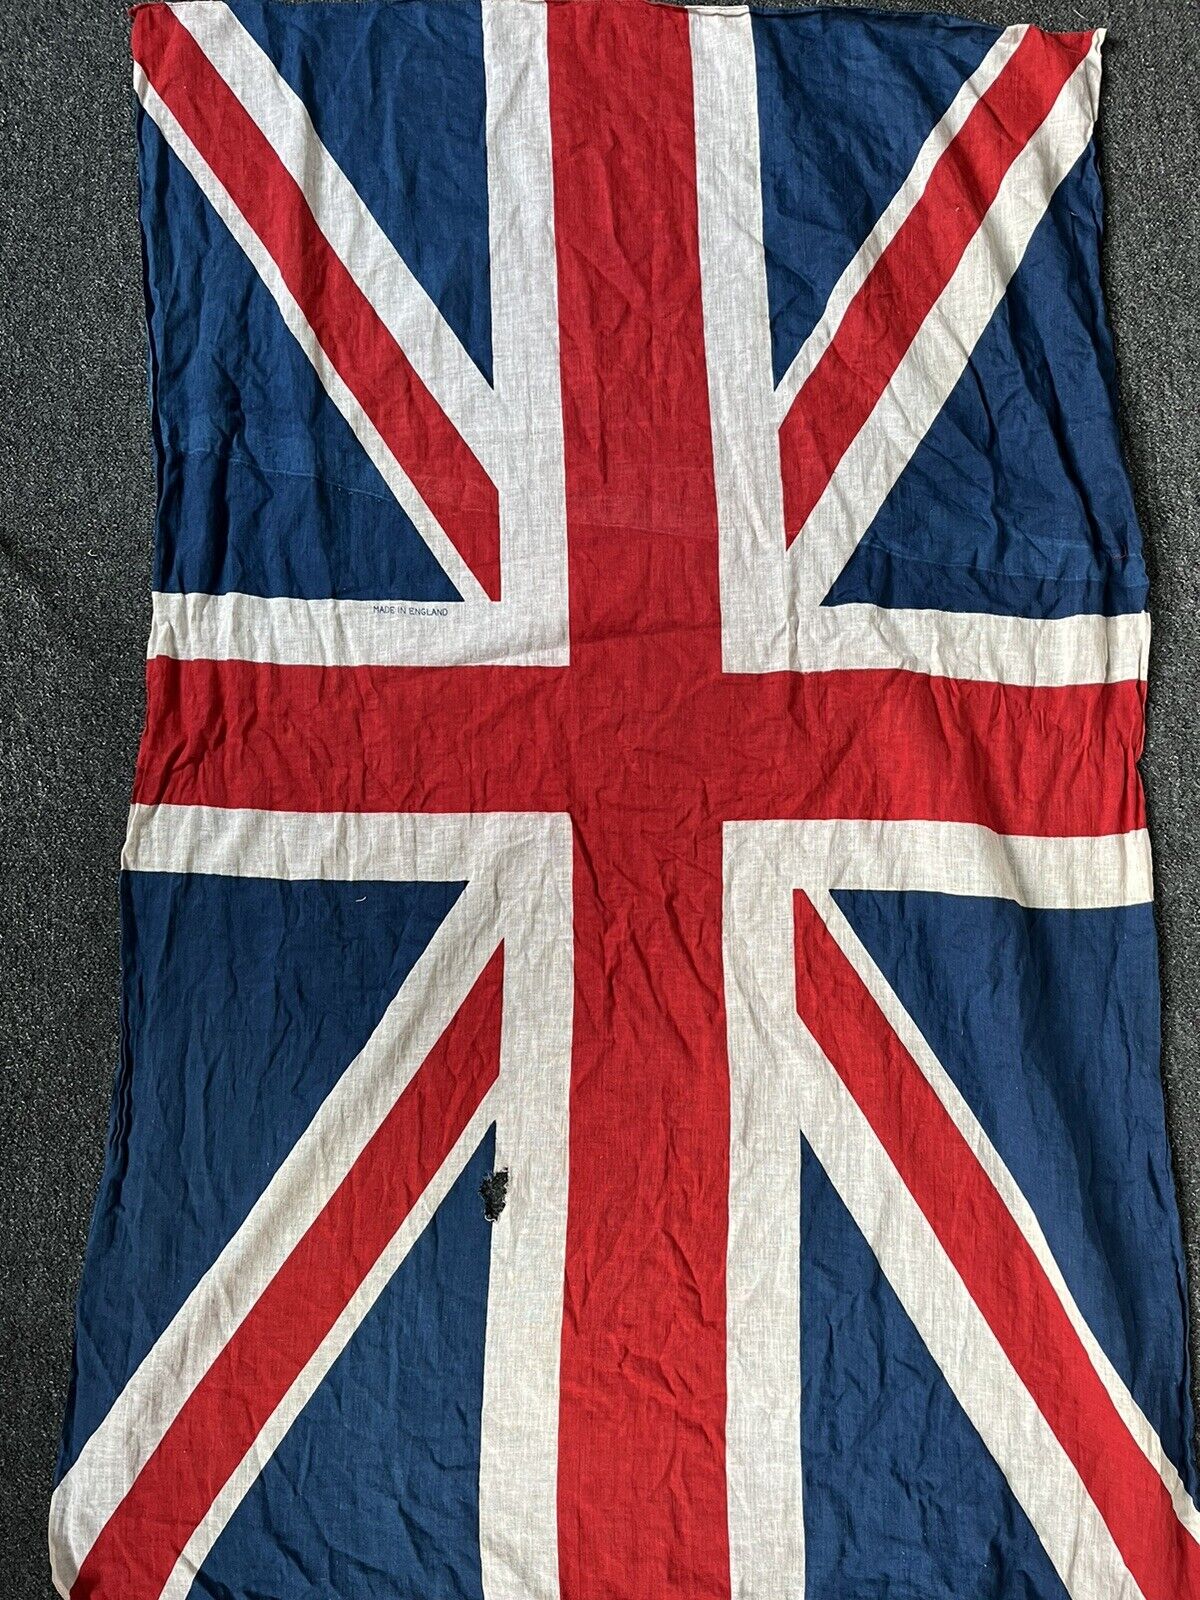 WW2 Large British Union Jack Flag       56inch x 36inch